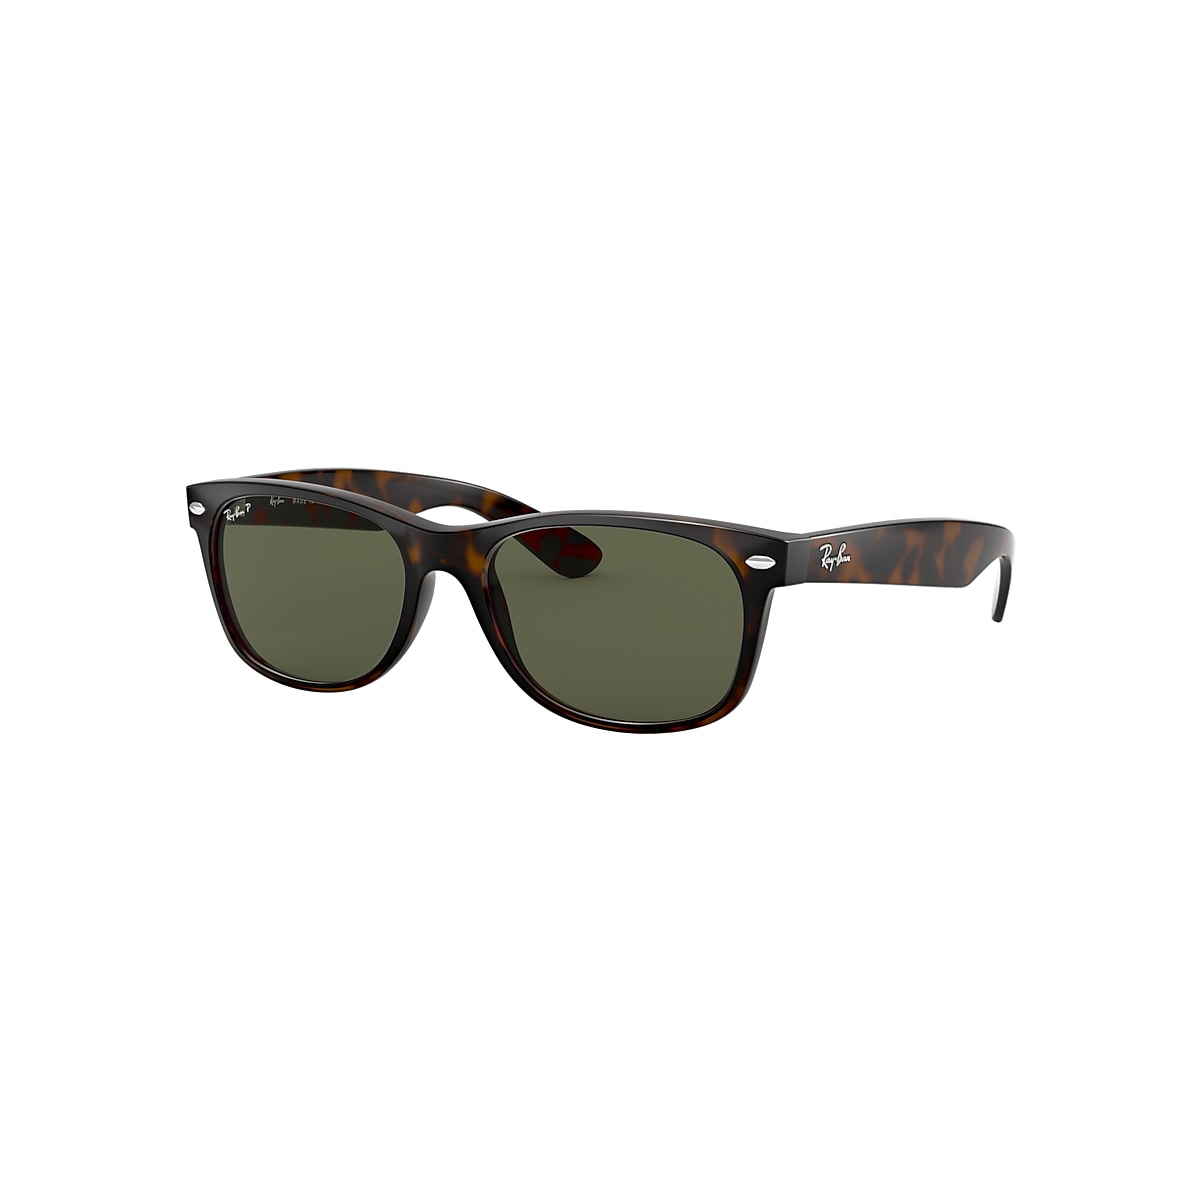 NEW WAYFARER CLASSIC Sunglasses in Tortoise and Green - RB2132 